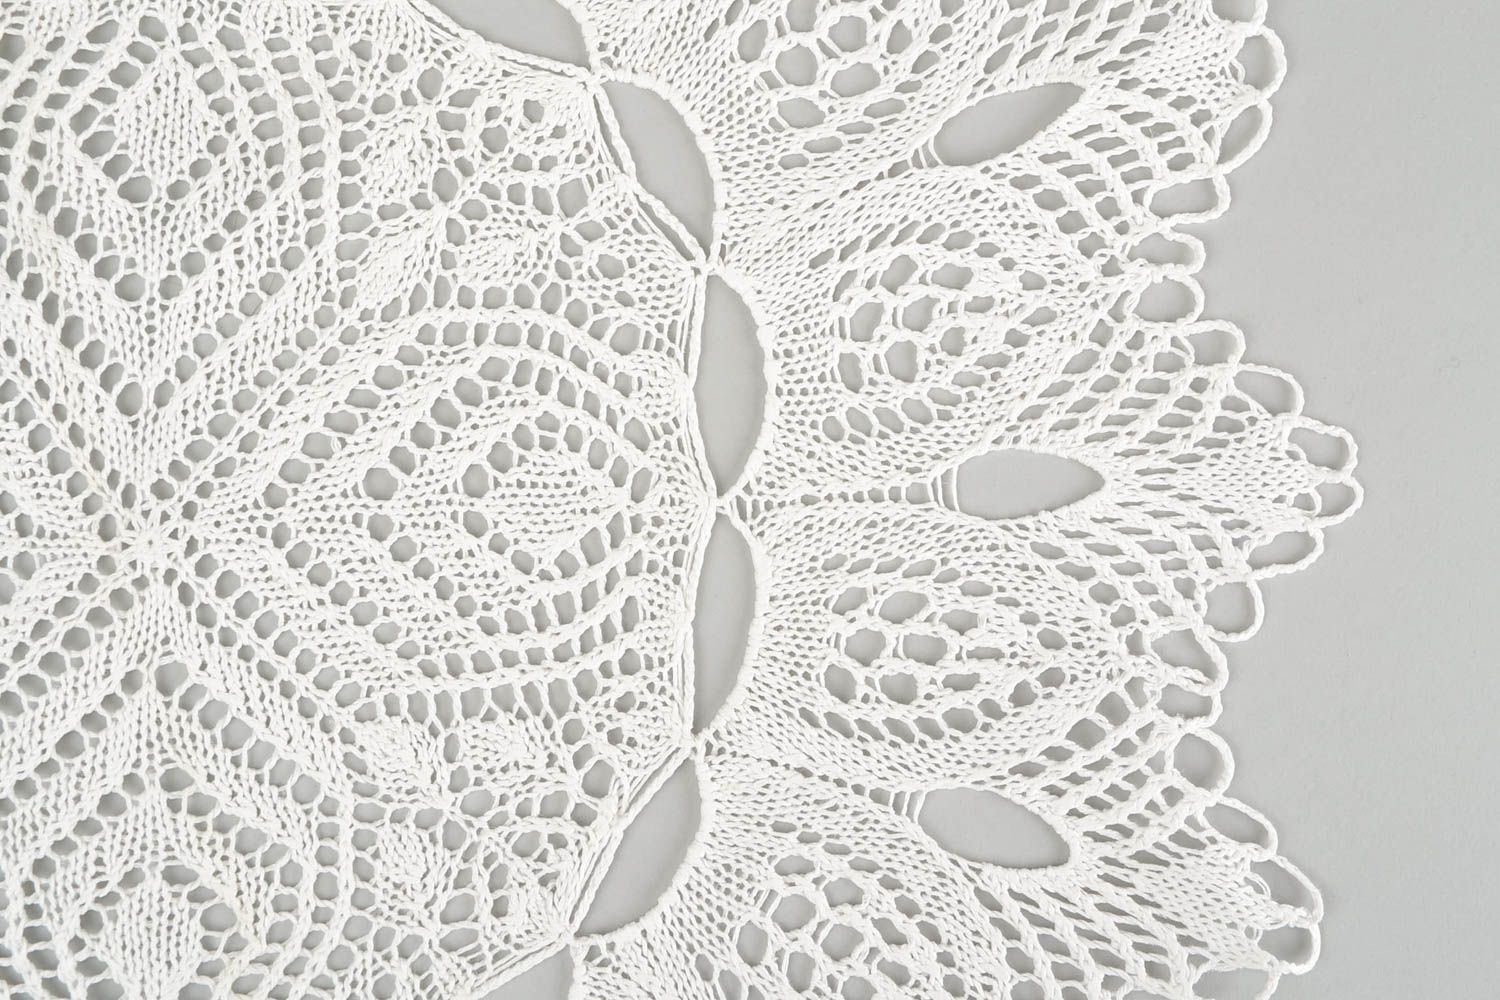 Handmade crocheted napkin knitted napkin for table home textiles decor ideas photo 4